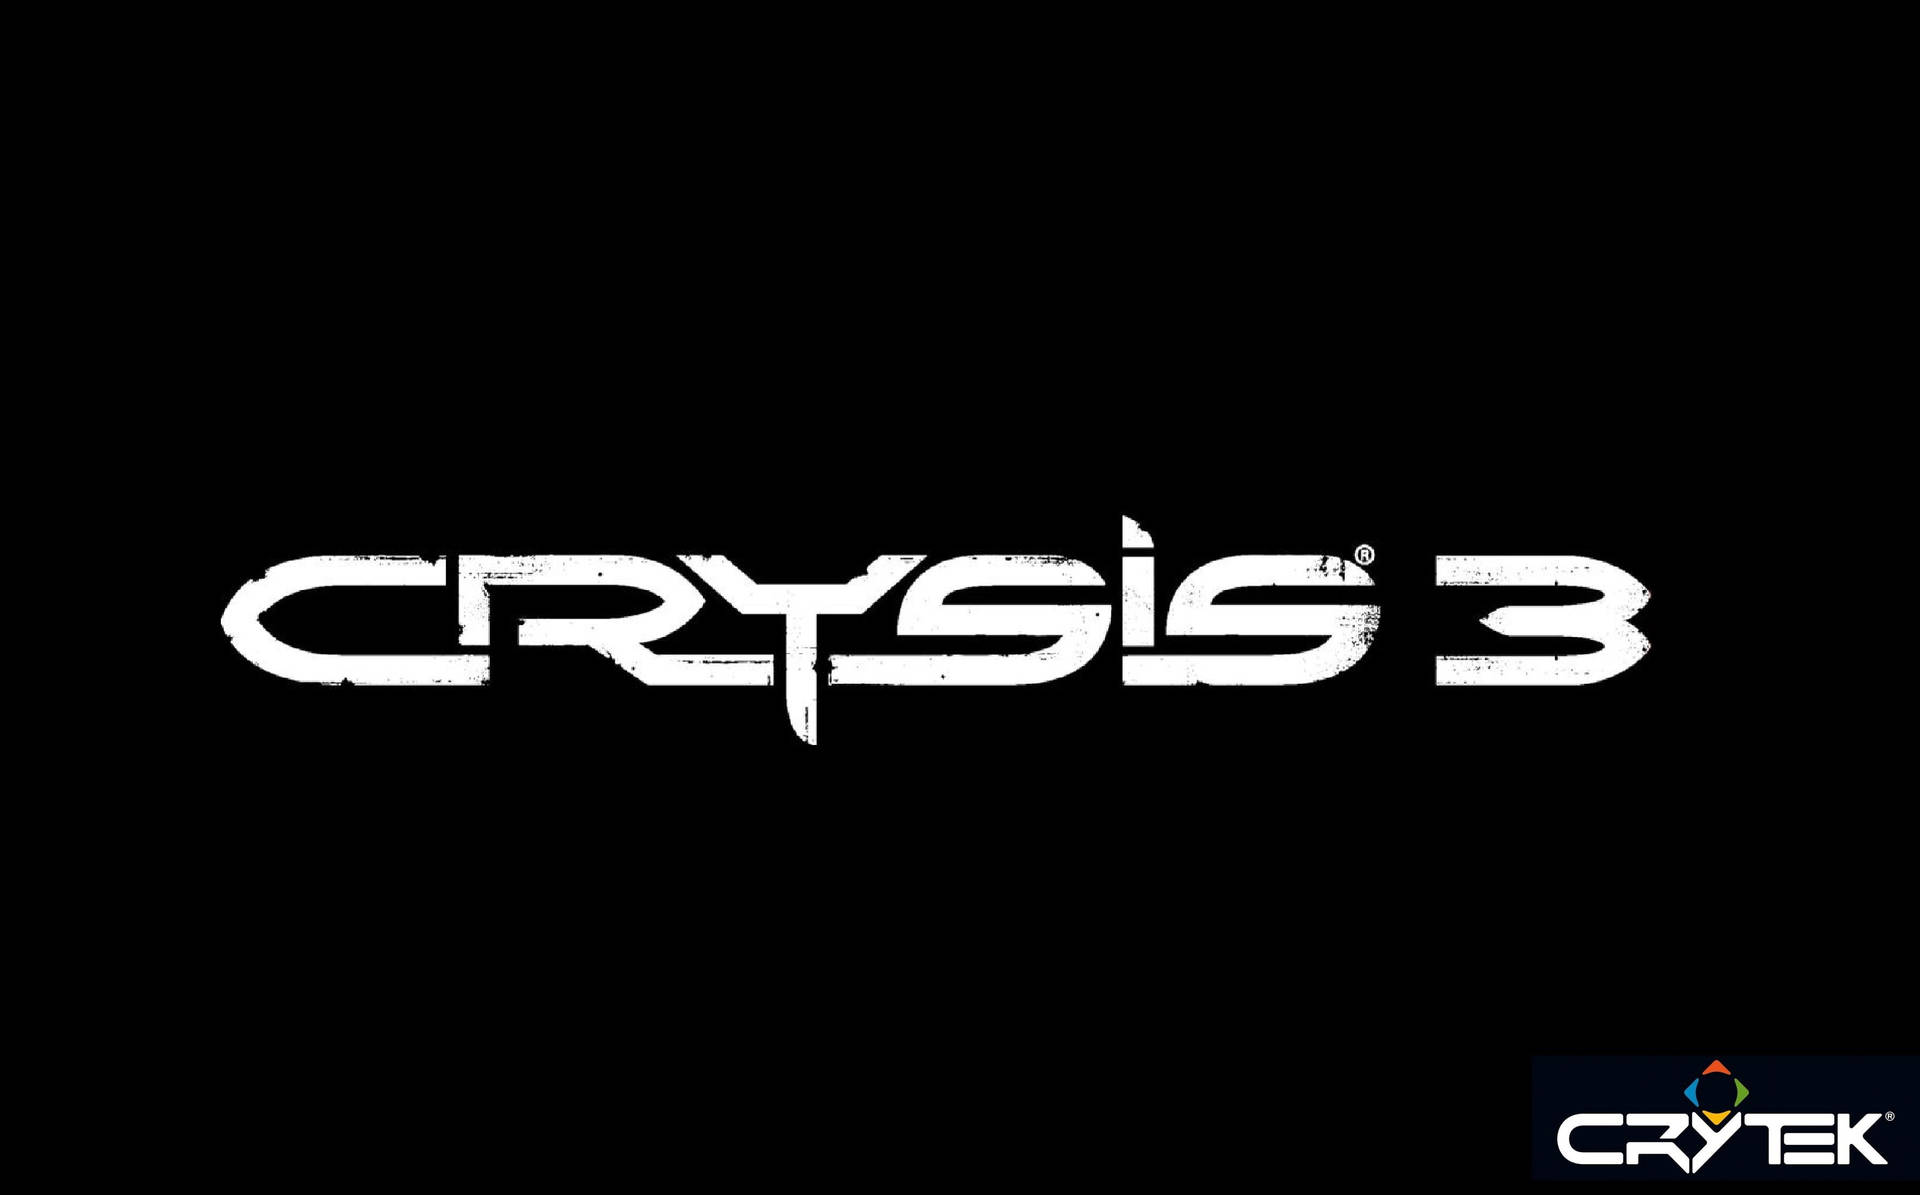 Top 999+ Crysis 3 4k Wallpaper Full HD, 4K✅Free to Use